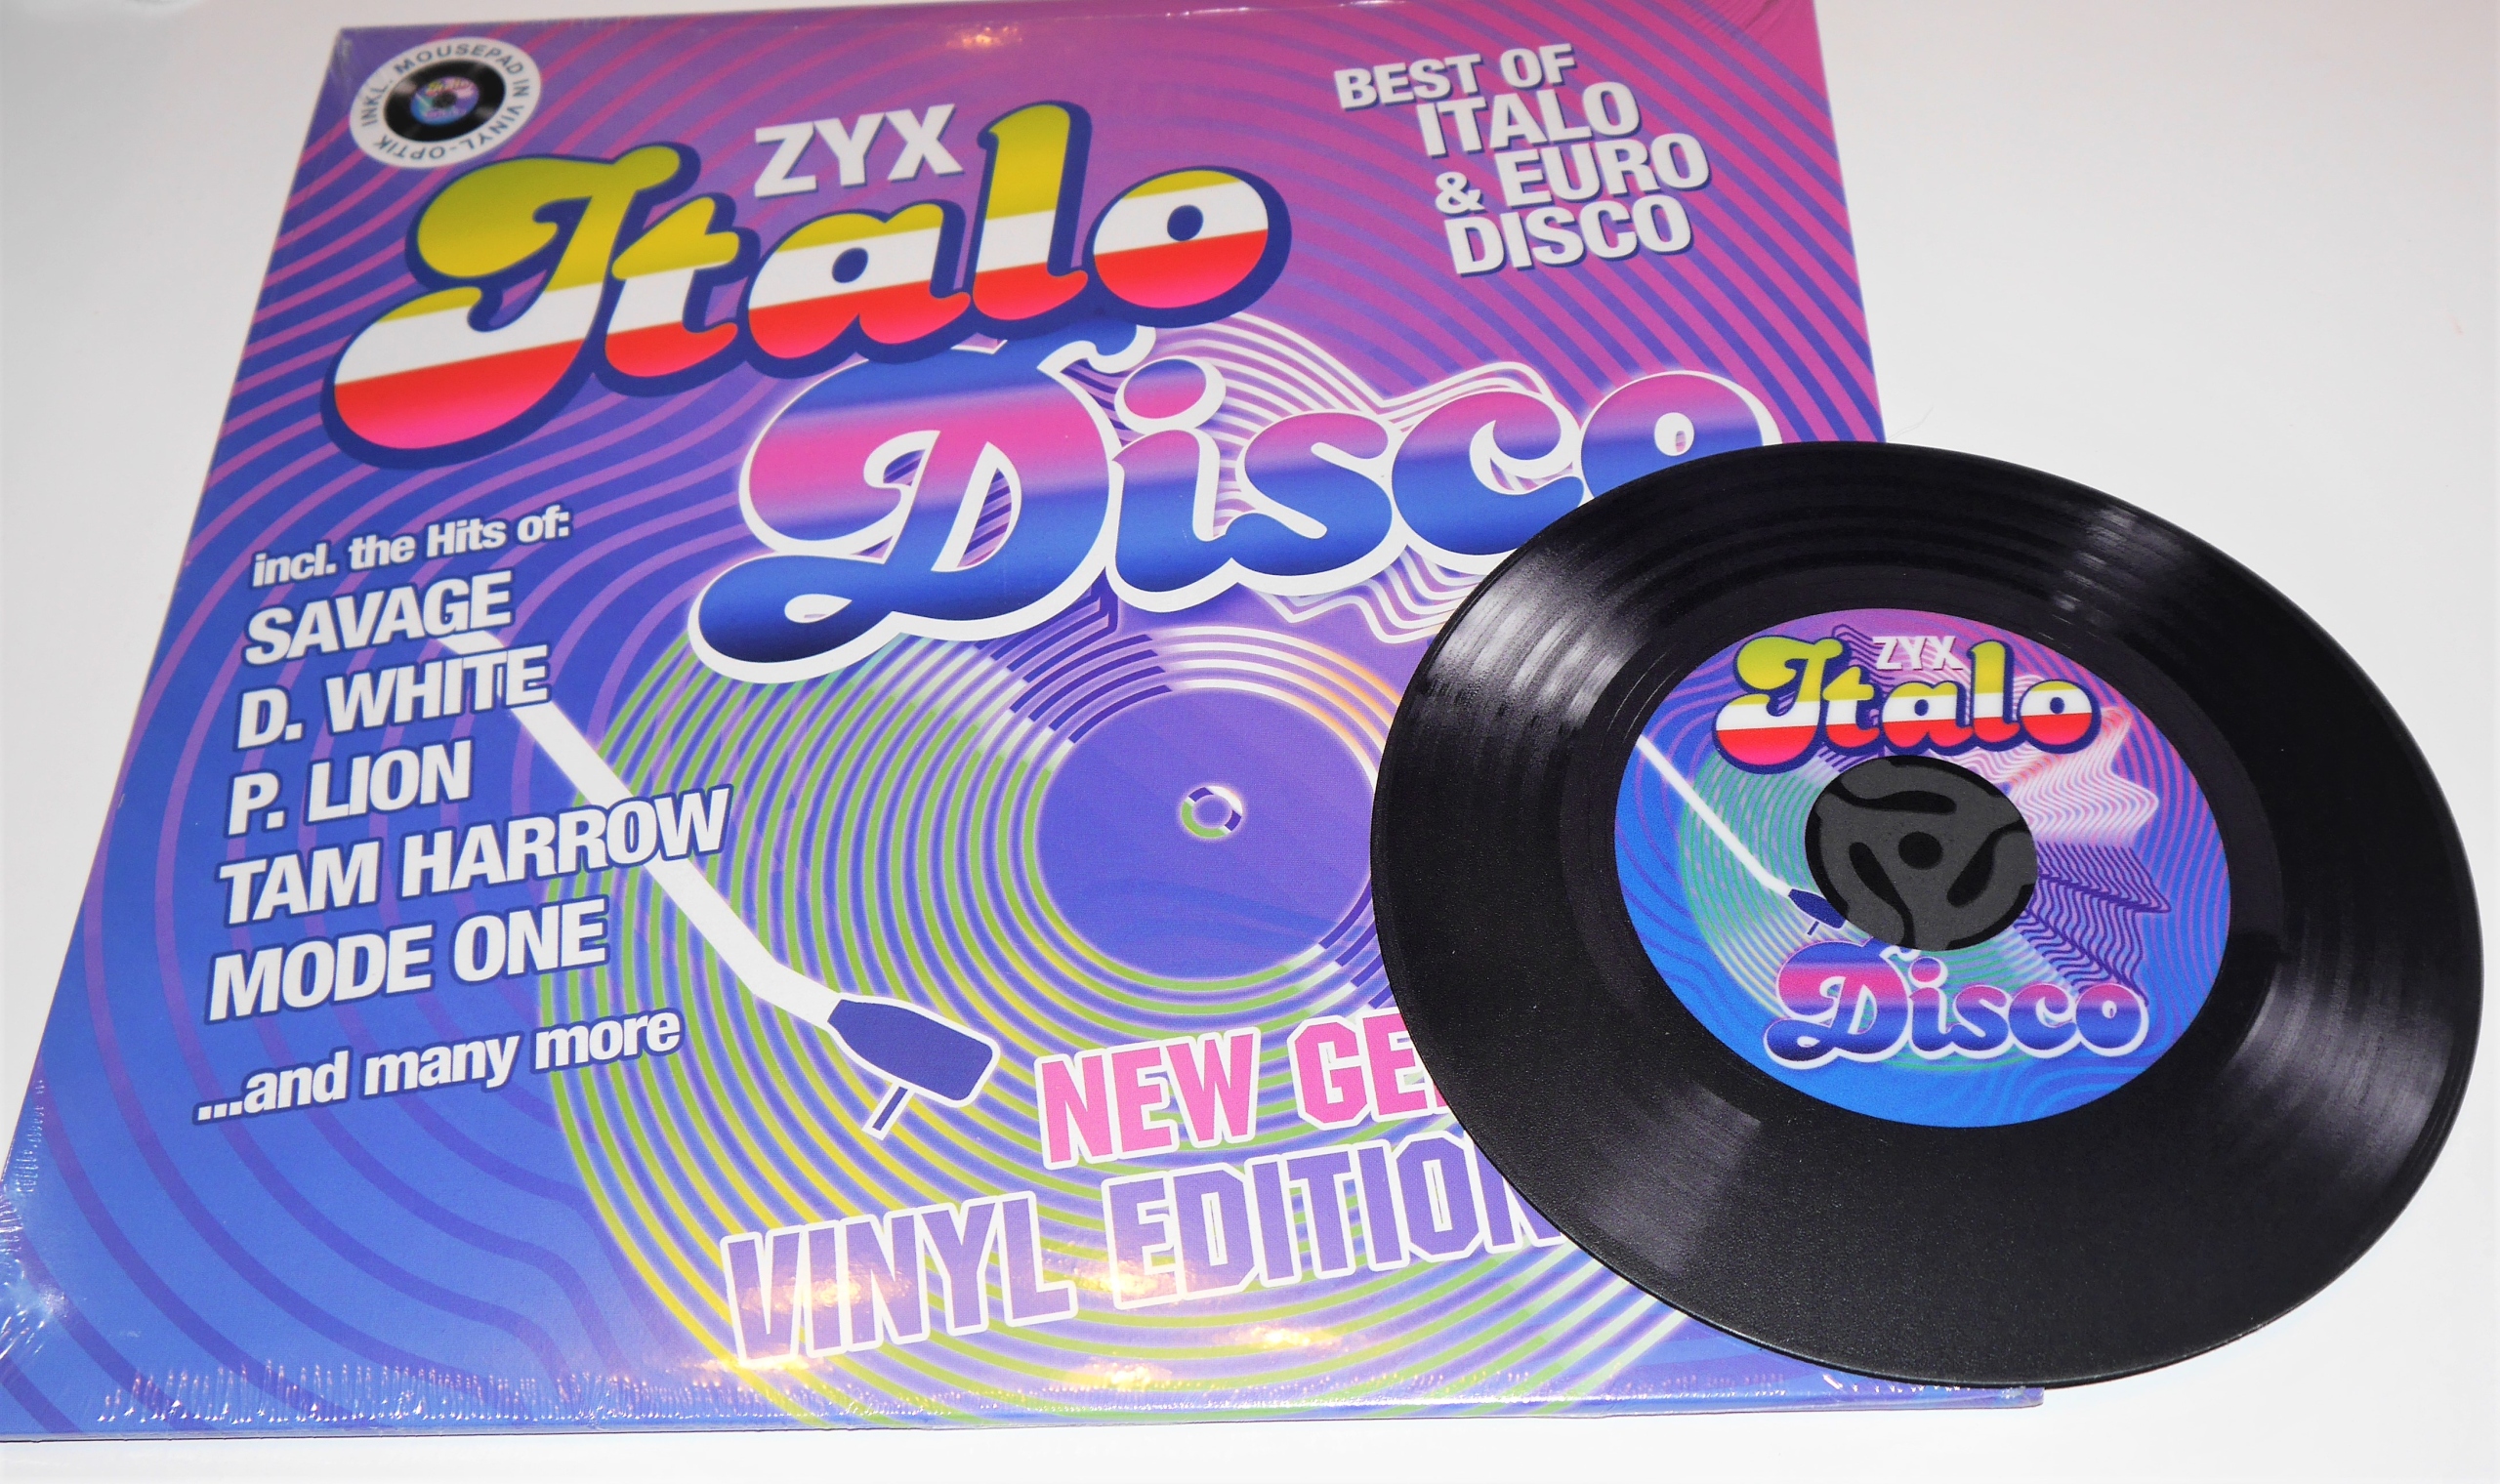 ZYX Italo Disco New Generation:Vinyl Edition Vol.2. Zyx italo disco new generation 24